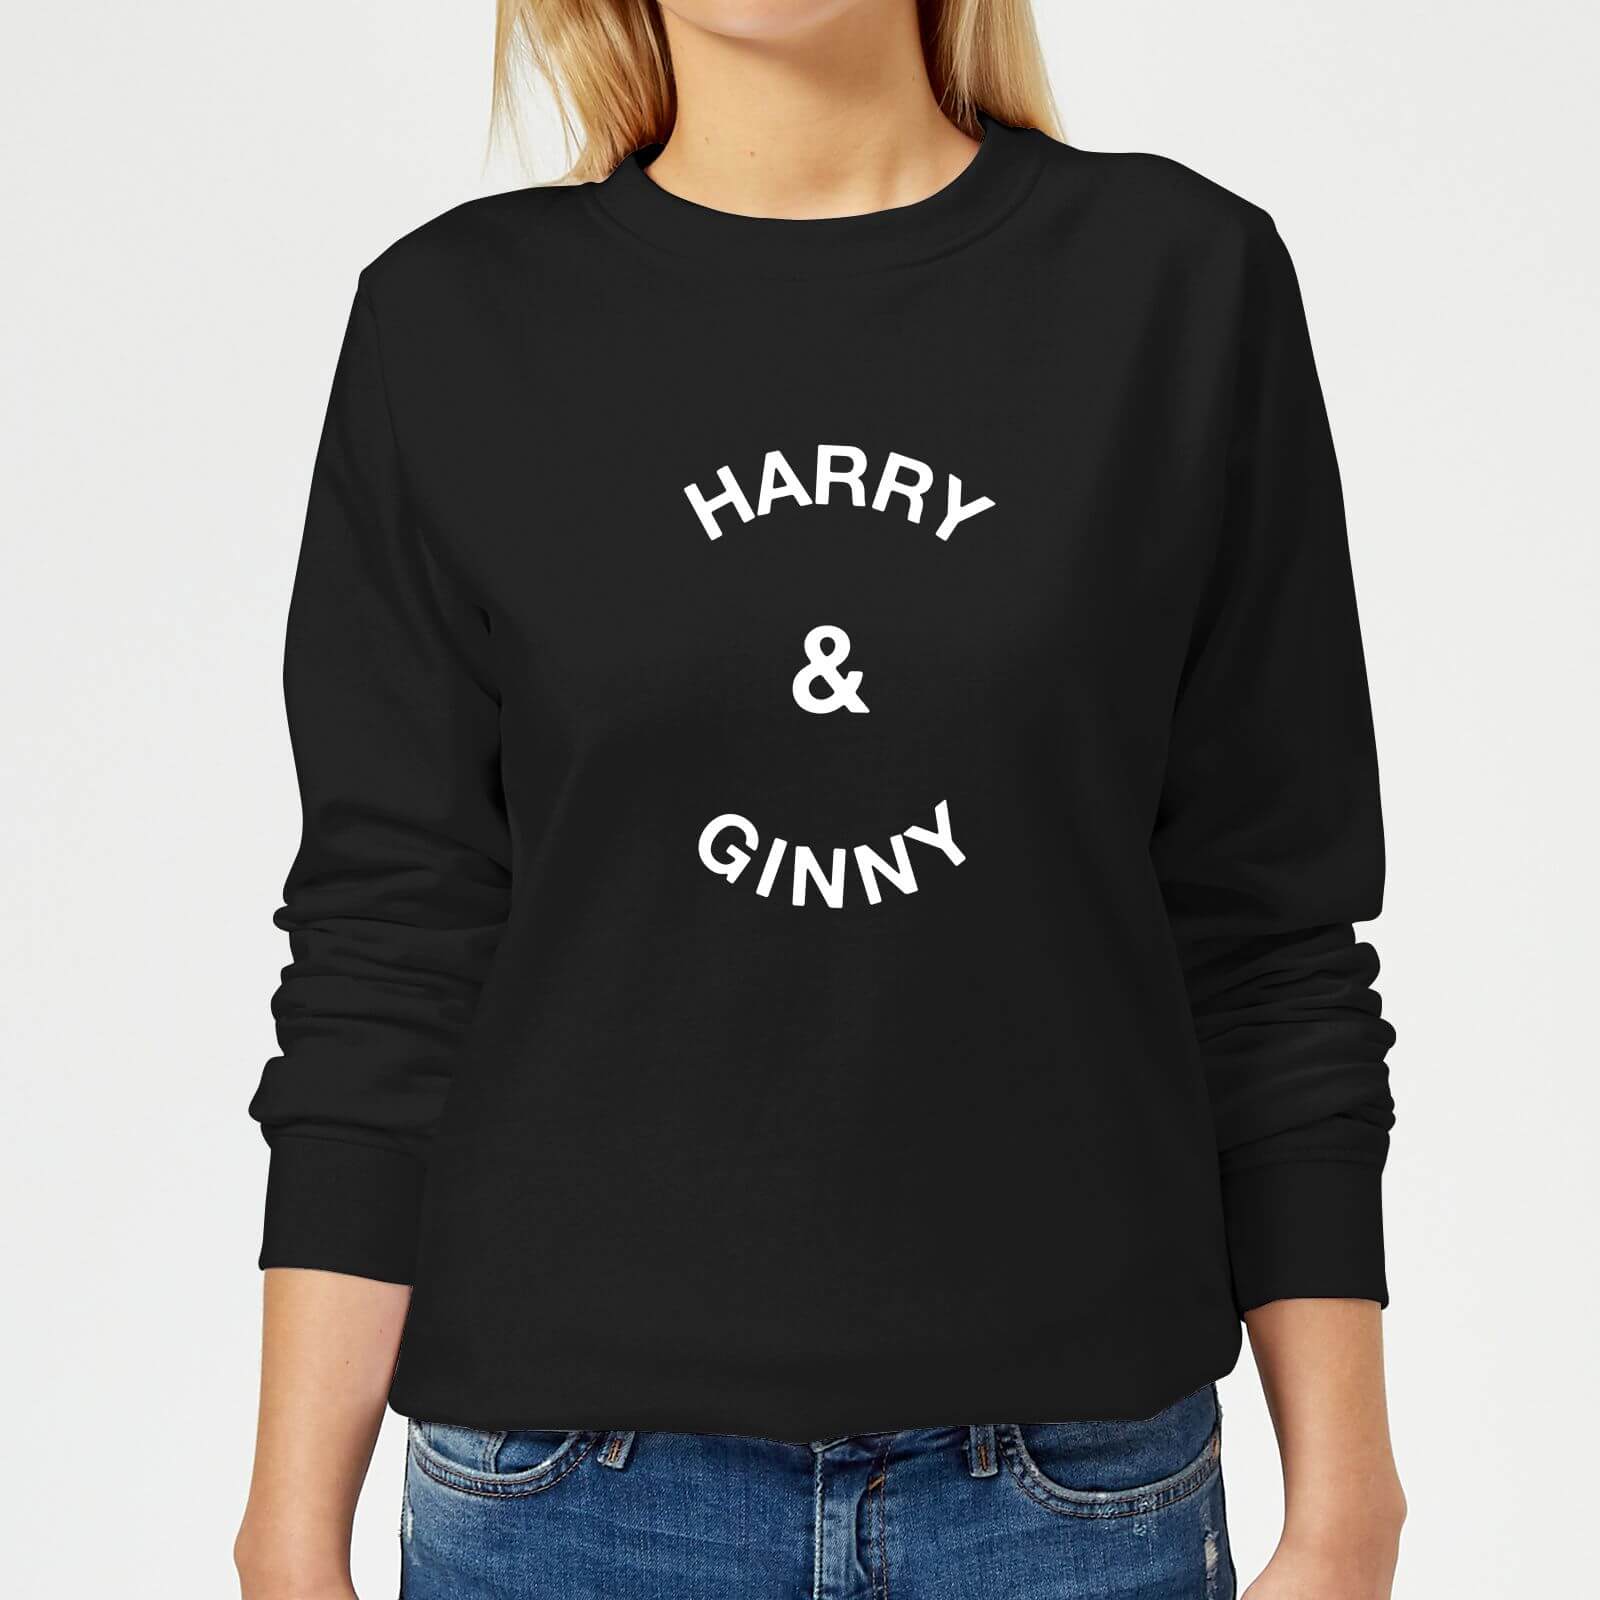 Harry & Ginny Women's Sweatshirt - Black - XL - Black